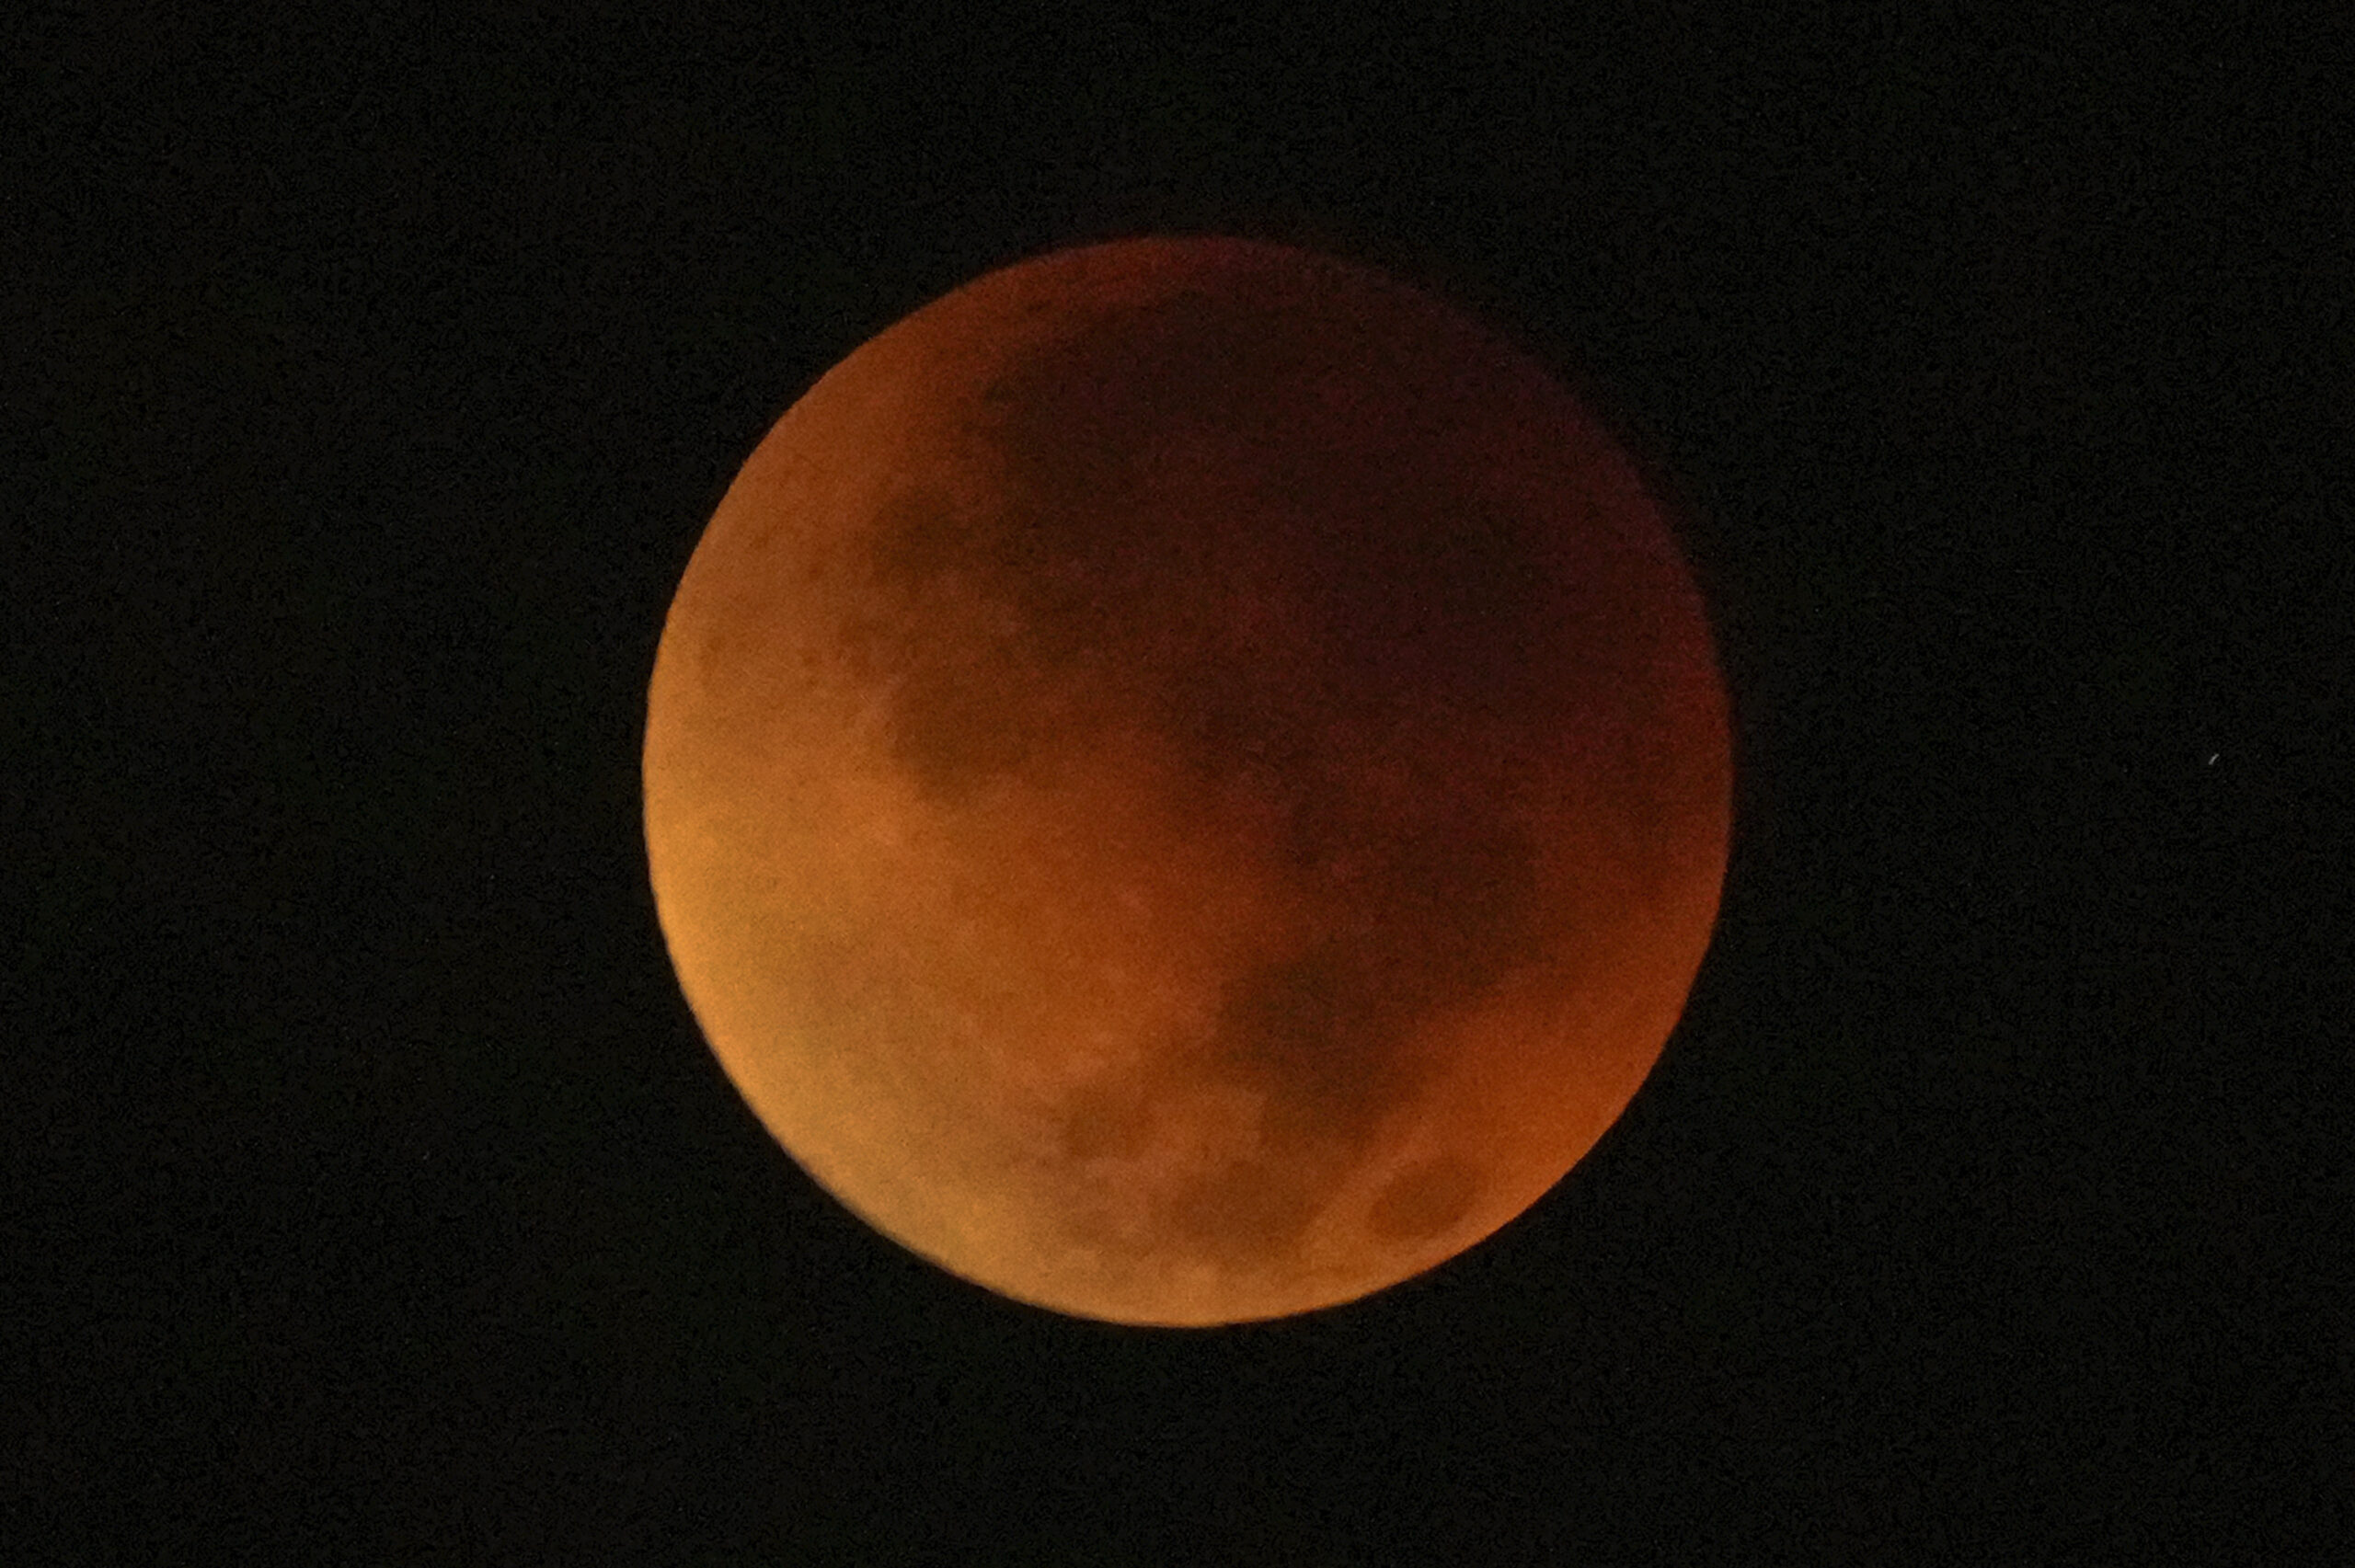 a reddish colored moon